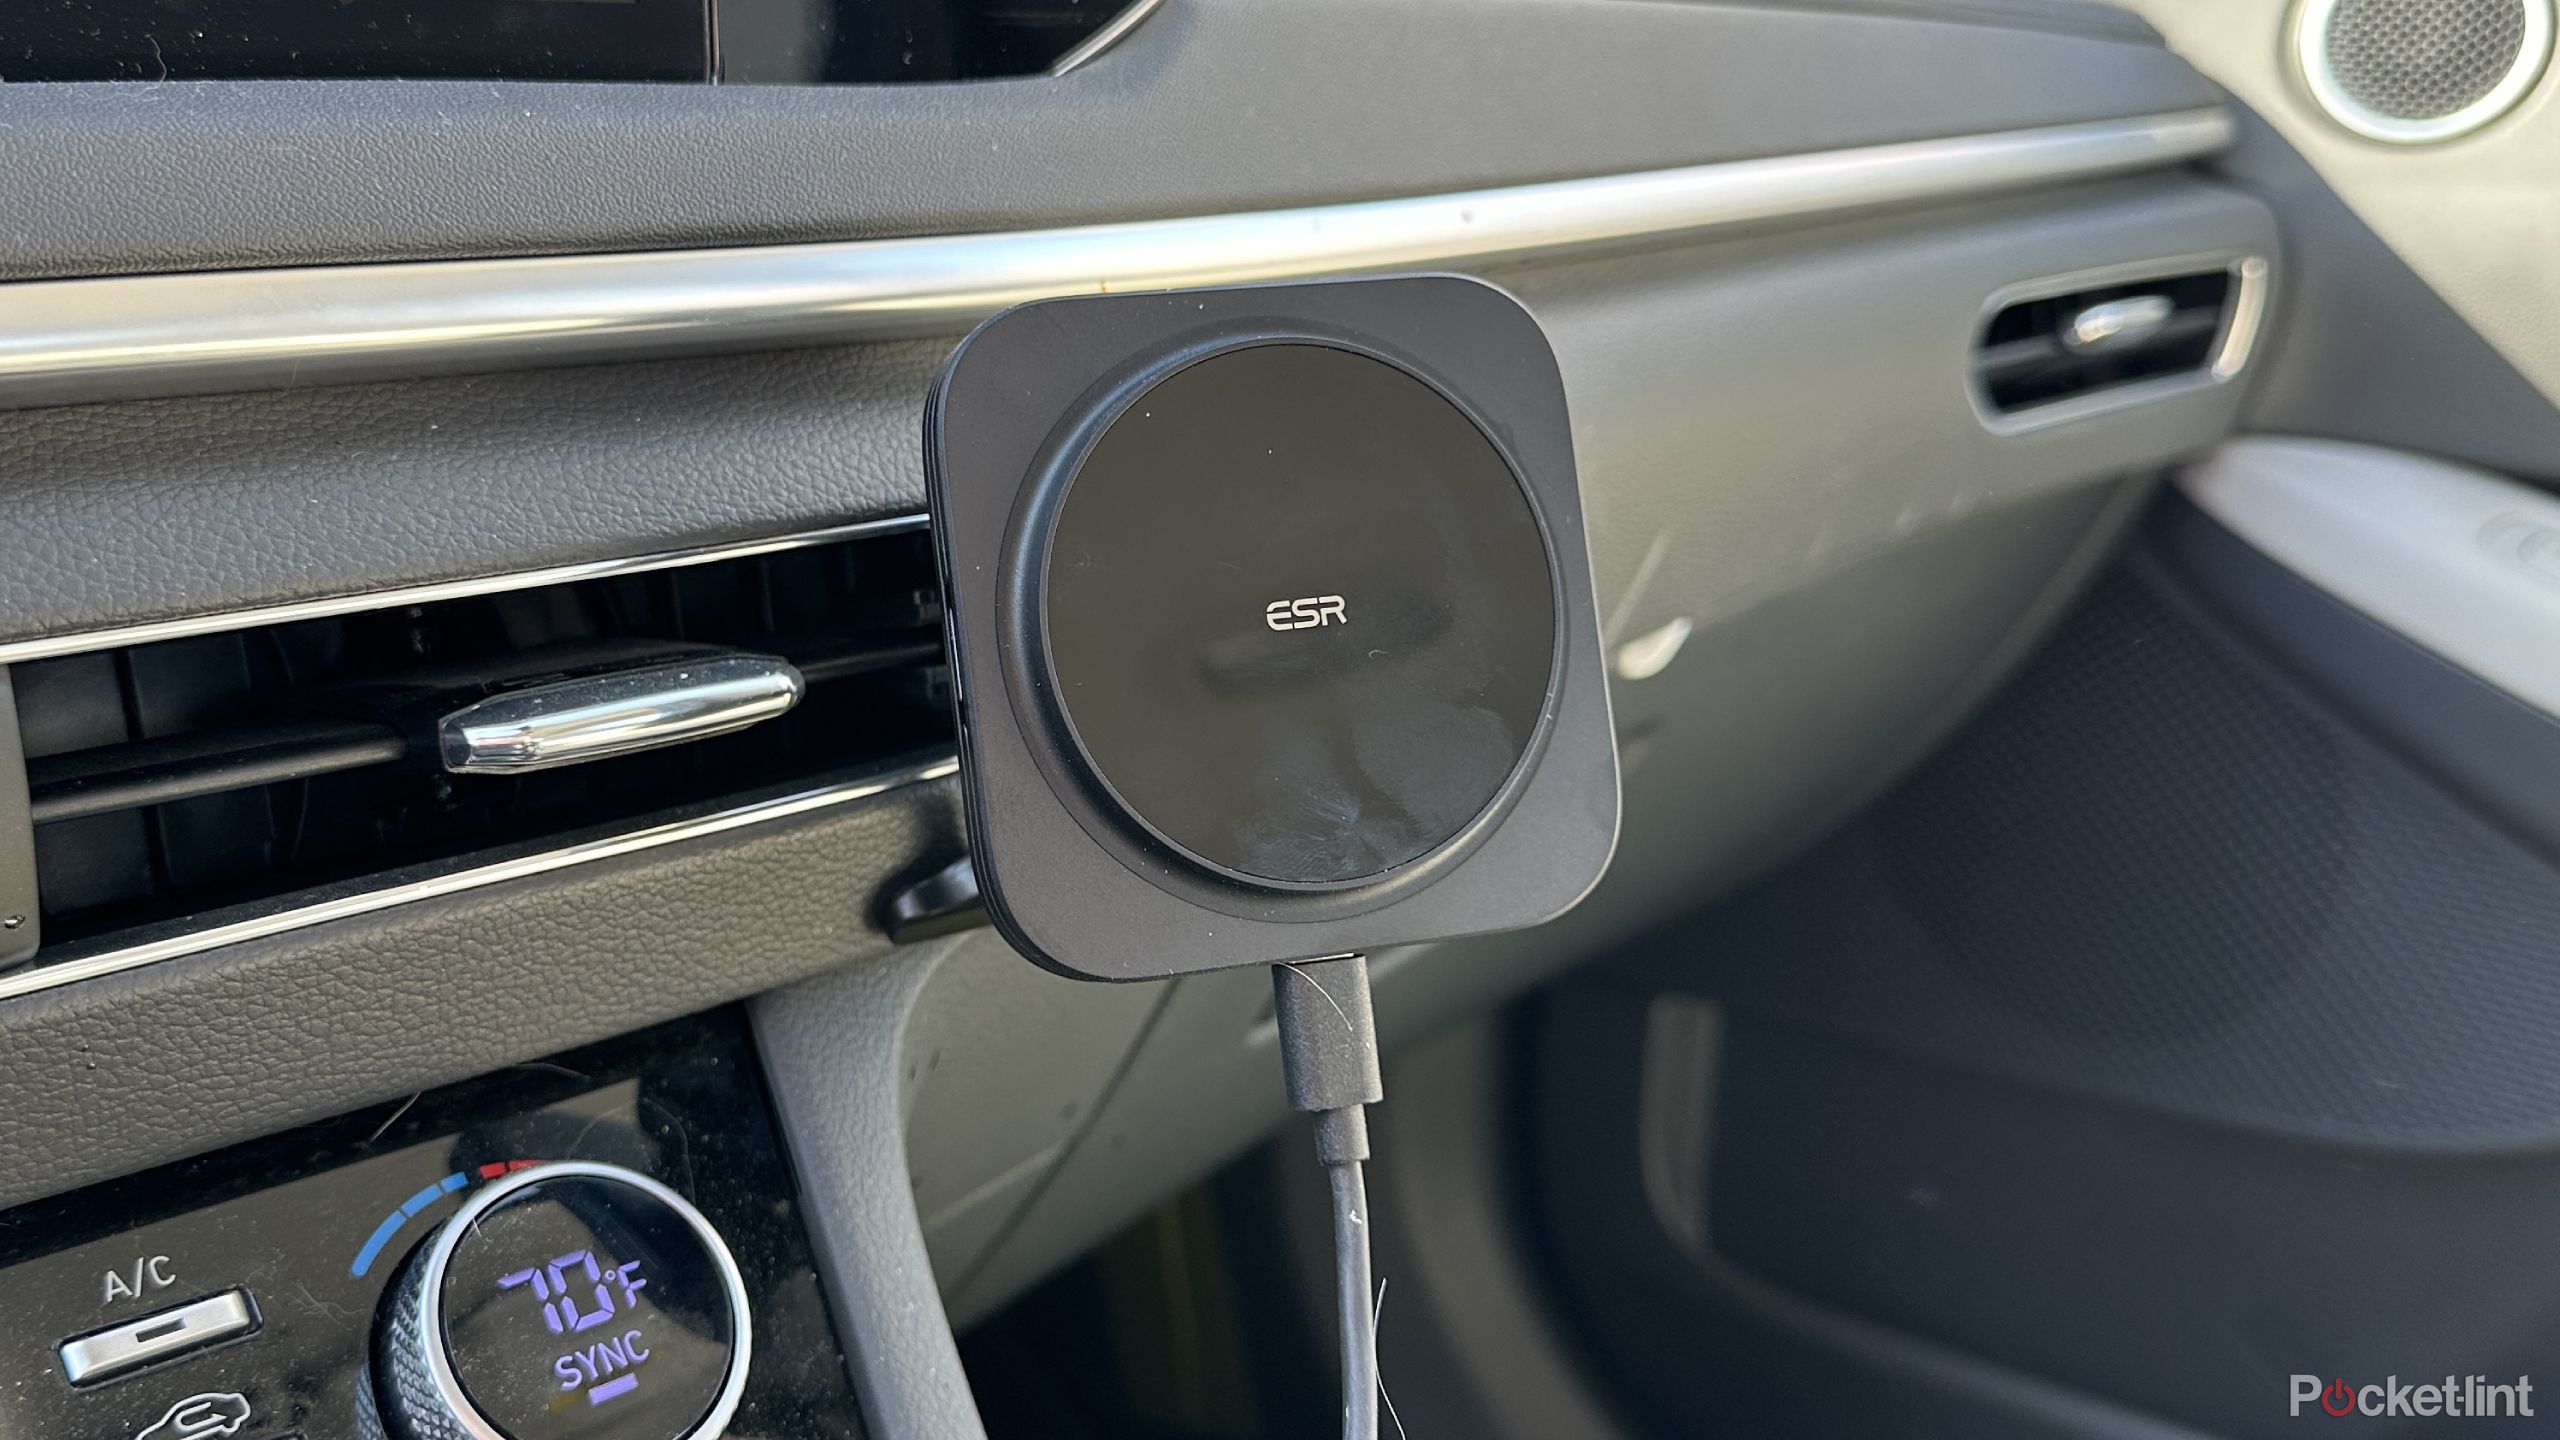 ESR Qi2 15W car mount charger review